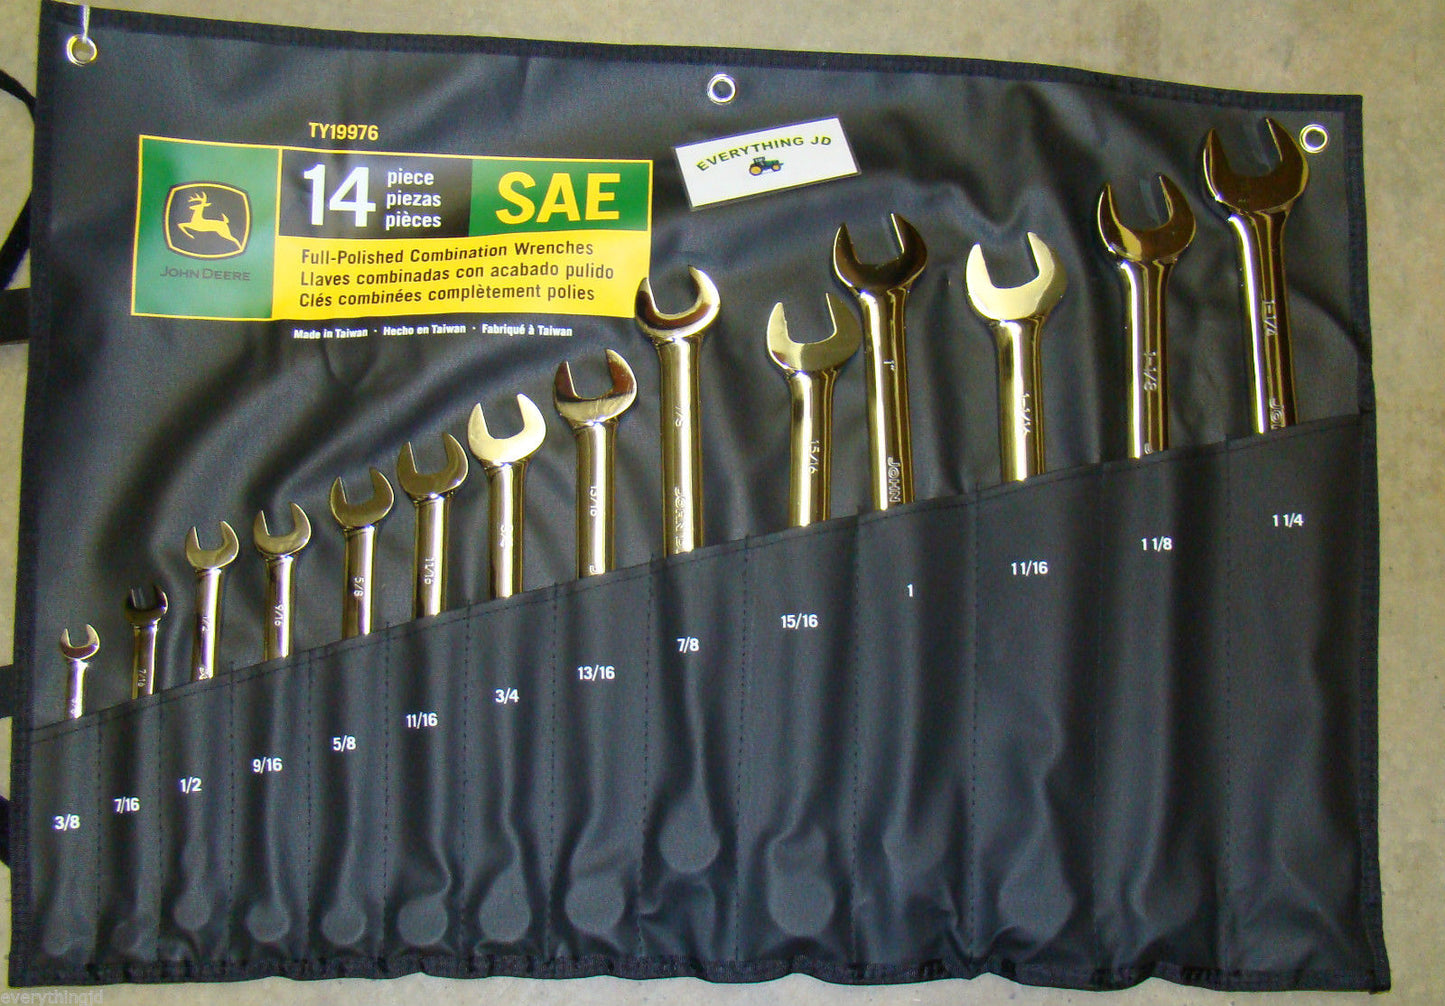 John Deere SAE Full-Polished Combination Wrench Set (14 piece set) - TY19976